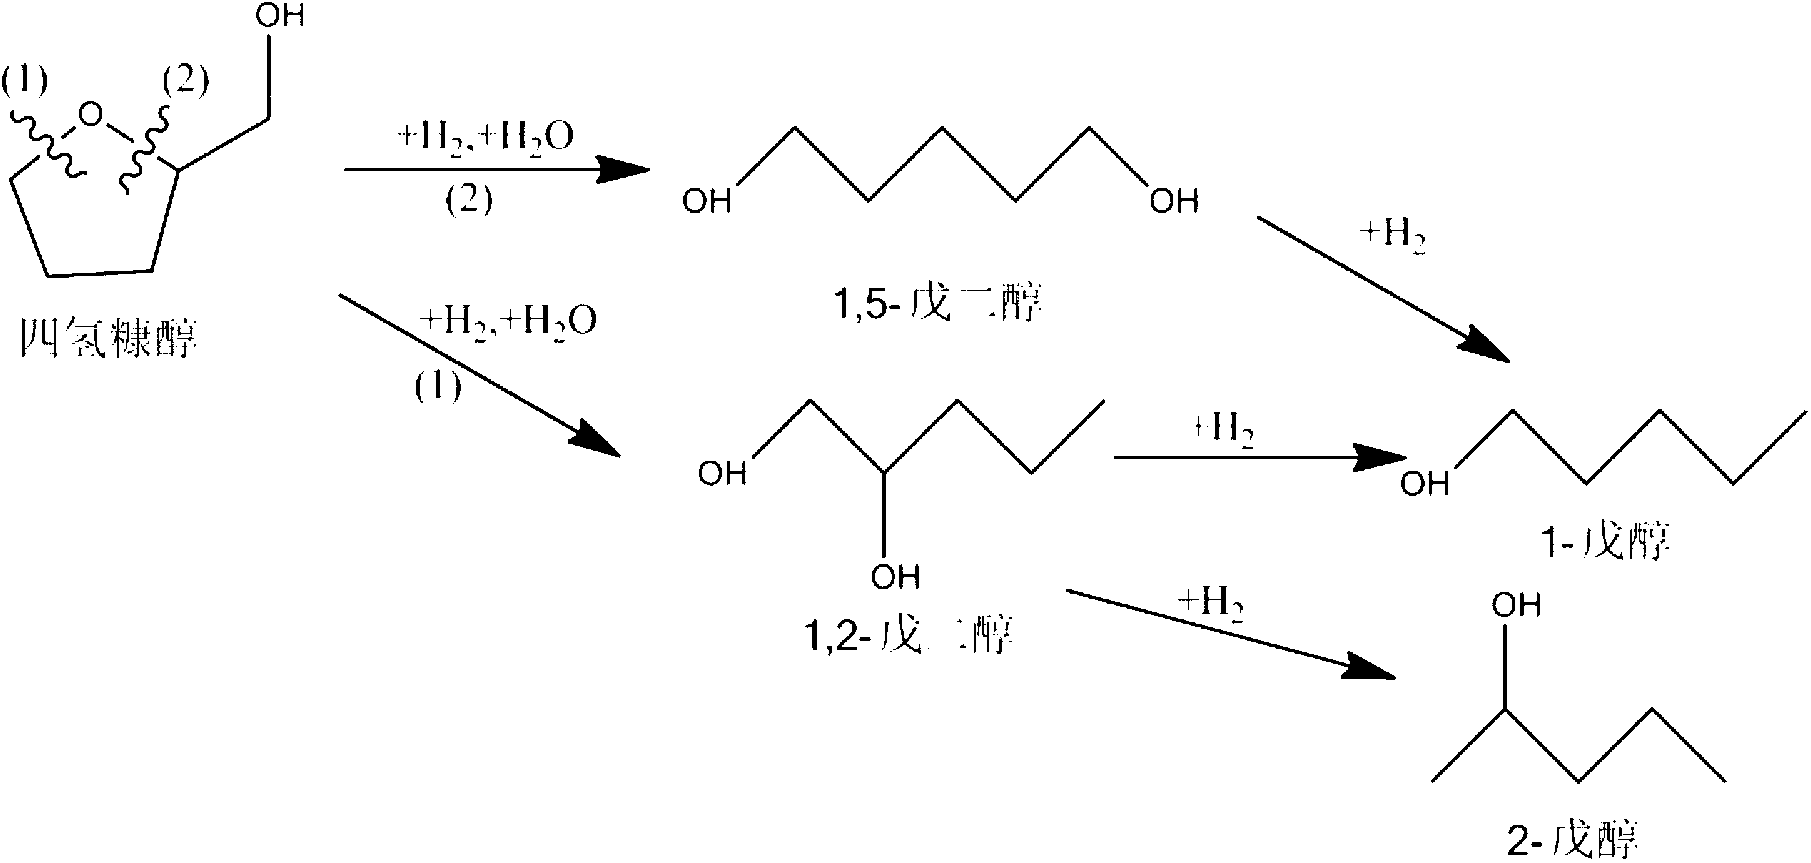 Catalyst and application of catalyst in technology for preparing 1,5-pentanediol through hydrogenolysis of tetrahydrofurfuryl alcohol